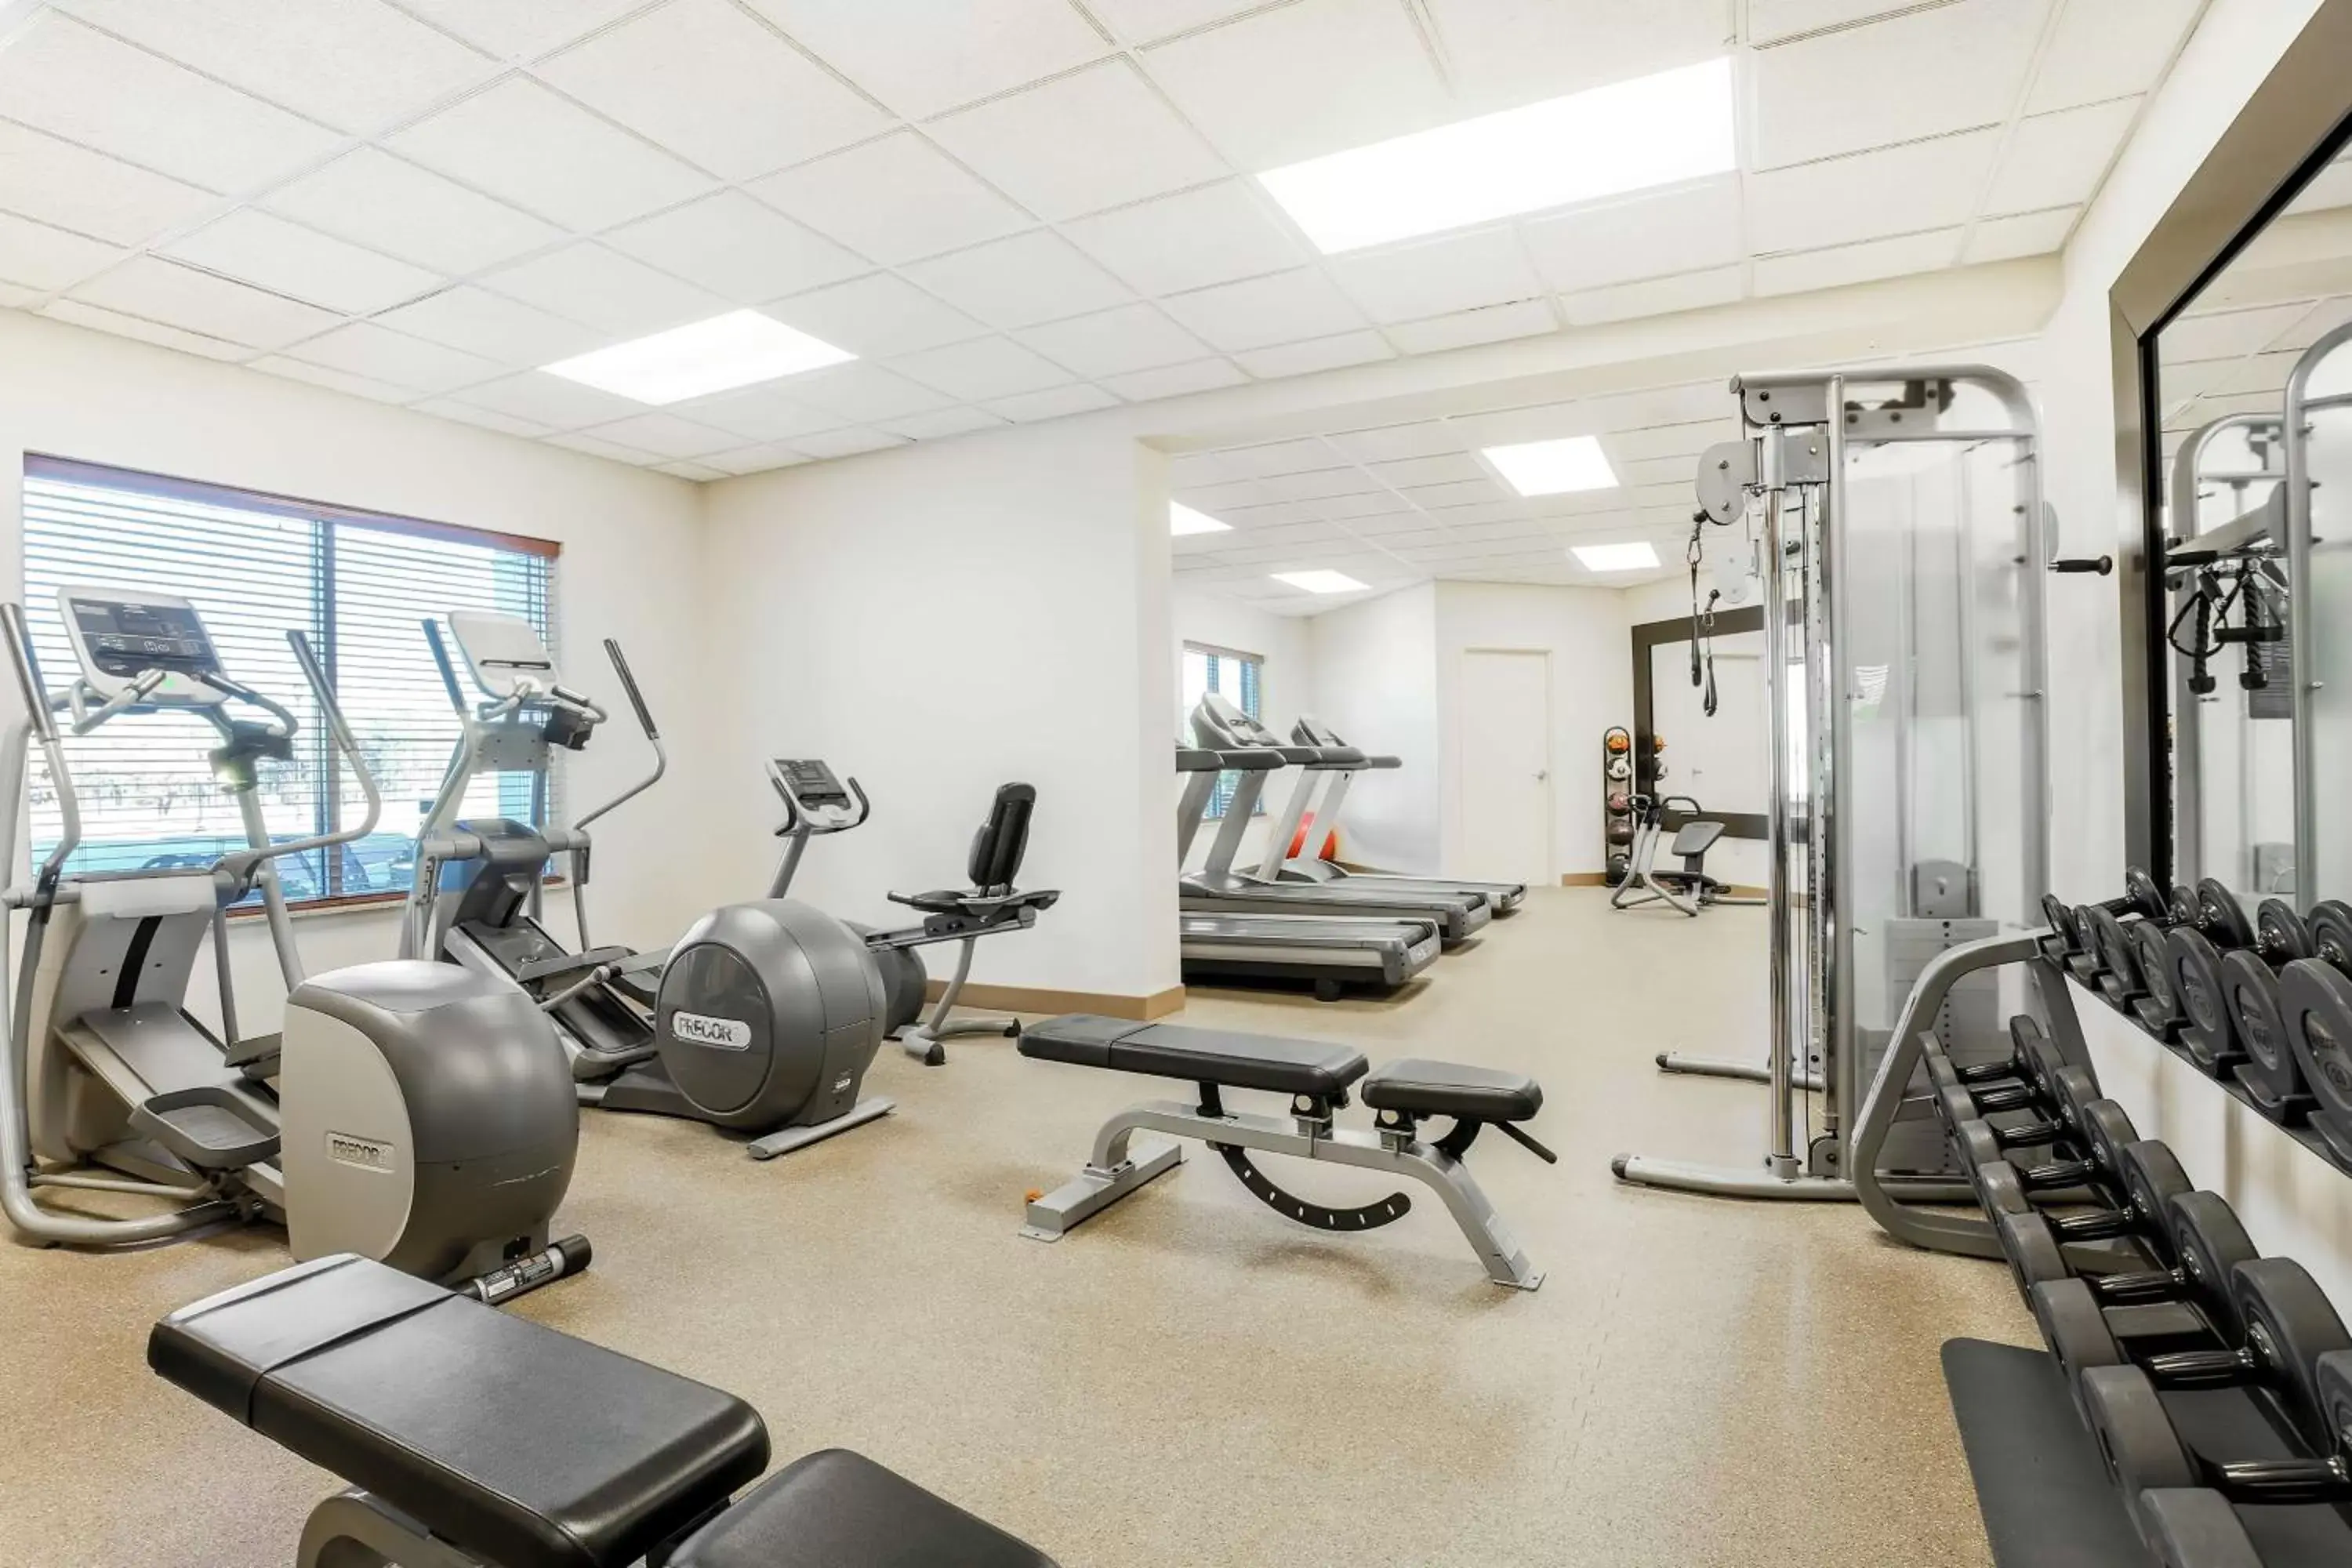 Fitness centre/facilities, Fitness Center/Facilities in Hilton Garden Inn Roanoke Rapids / Carolina Crossroads